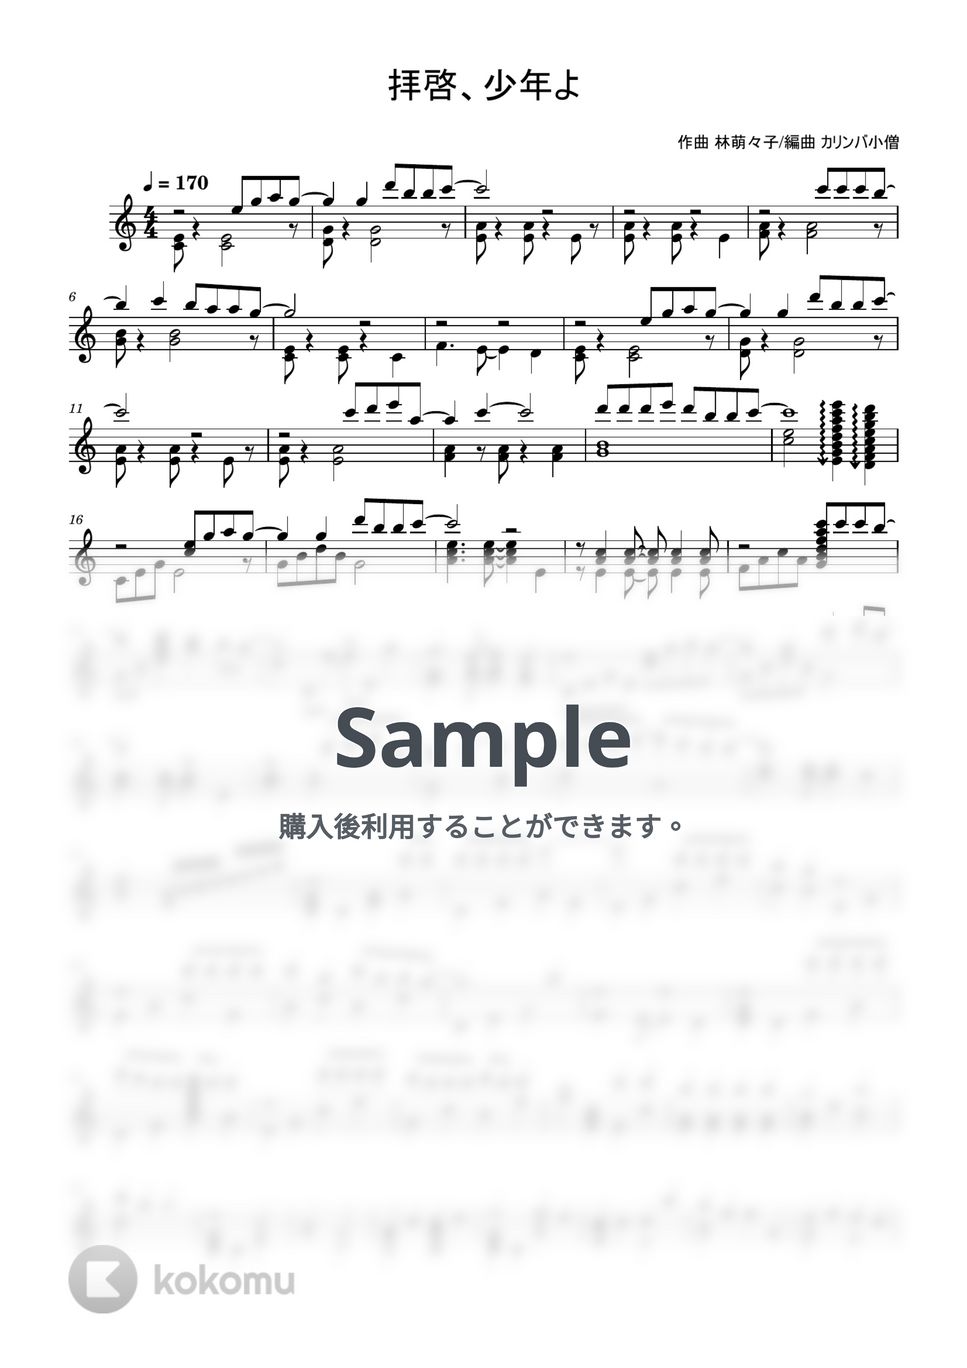 Hump Back - 拝啓、少年よ (演奏付き カリンバ楽譜) by カリンバ小僧